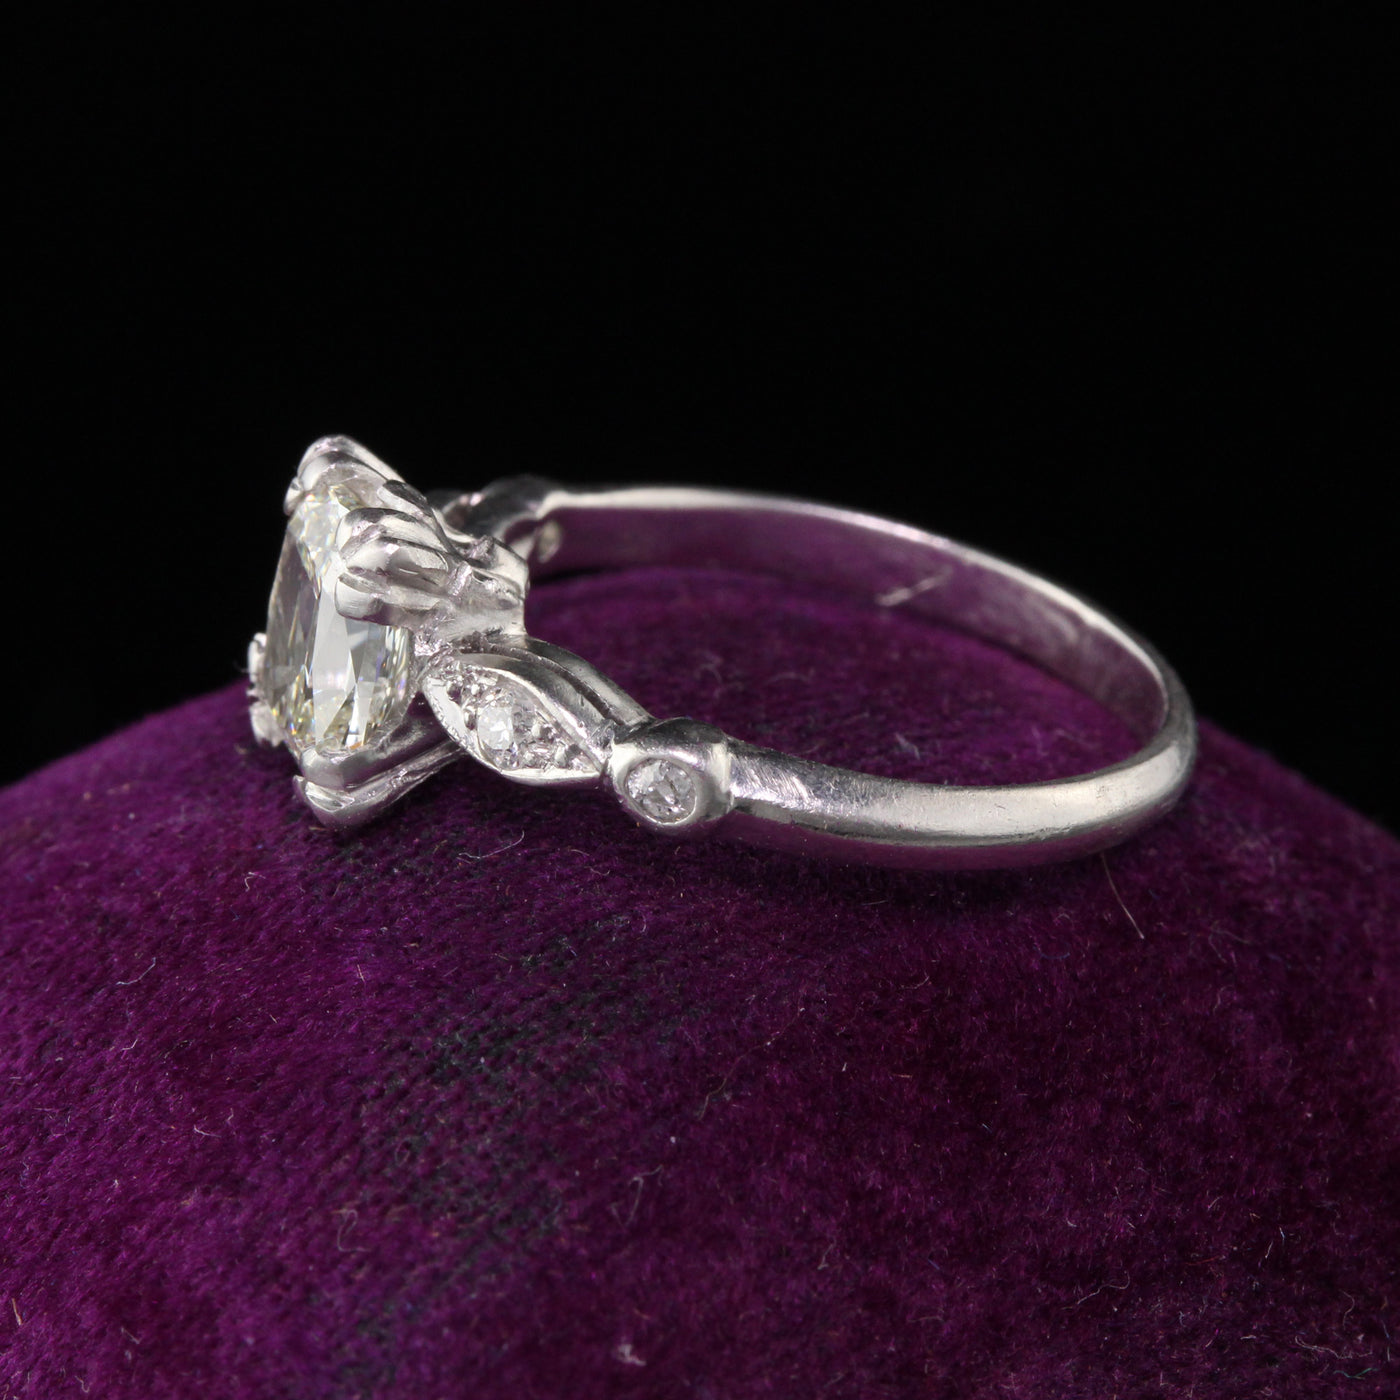 Antique Art Deco Platinum Old Cushion Cut Diamond Engagement Ring - The Antique Parlour